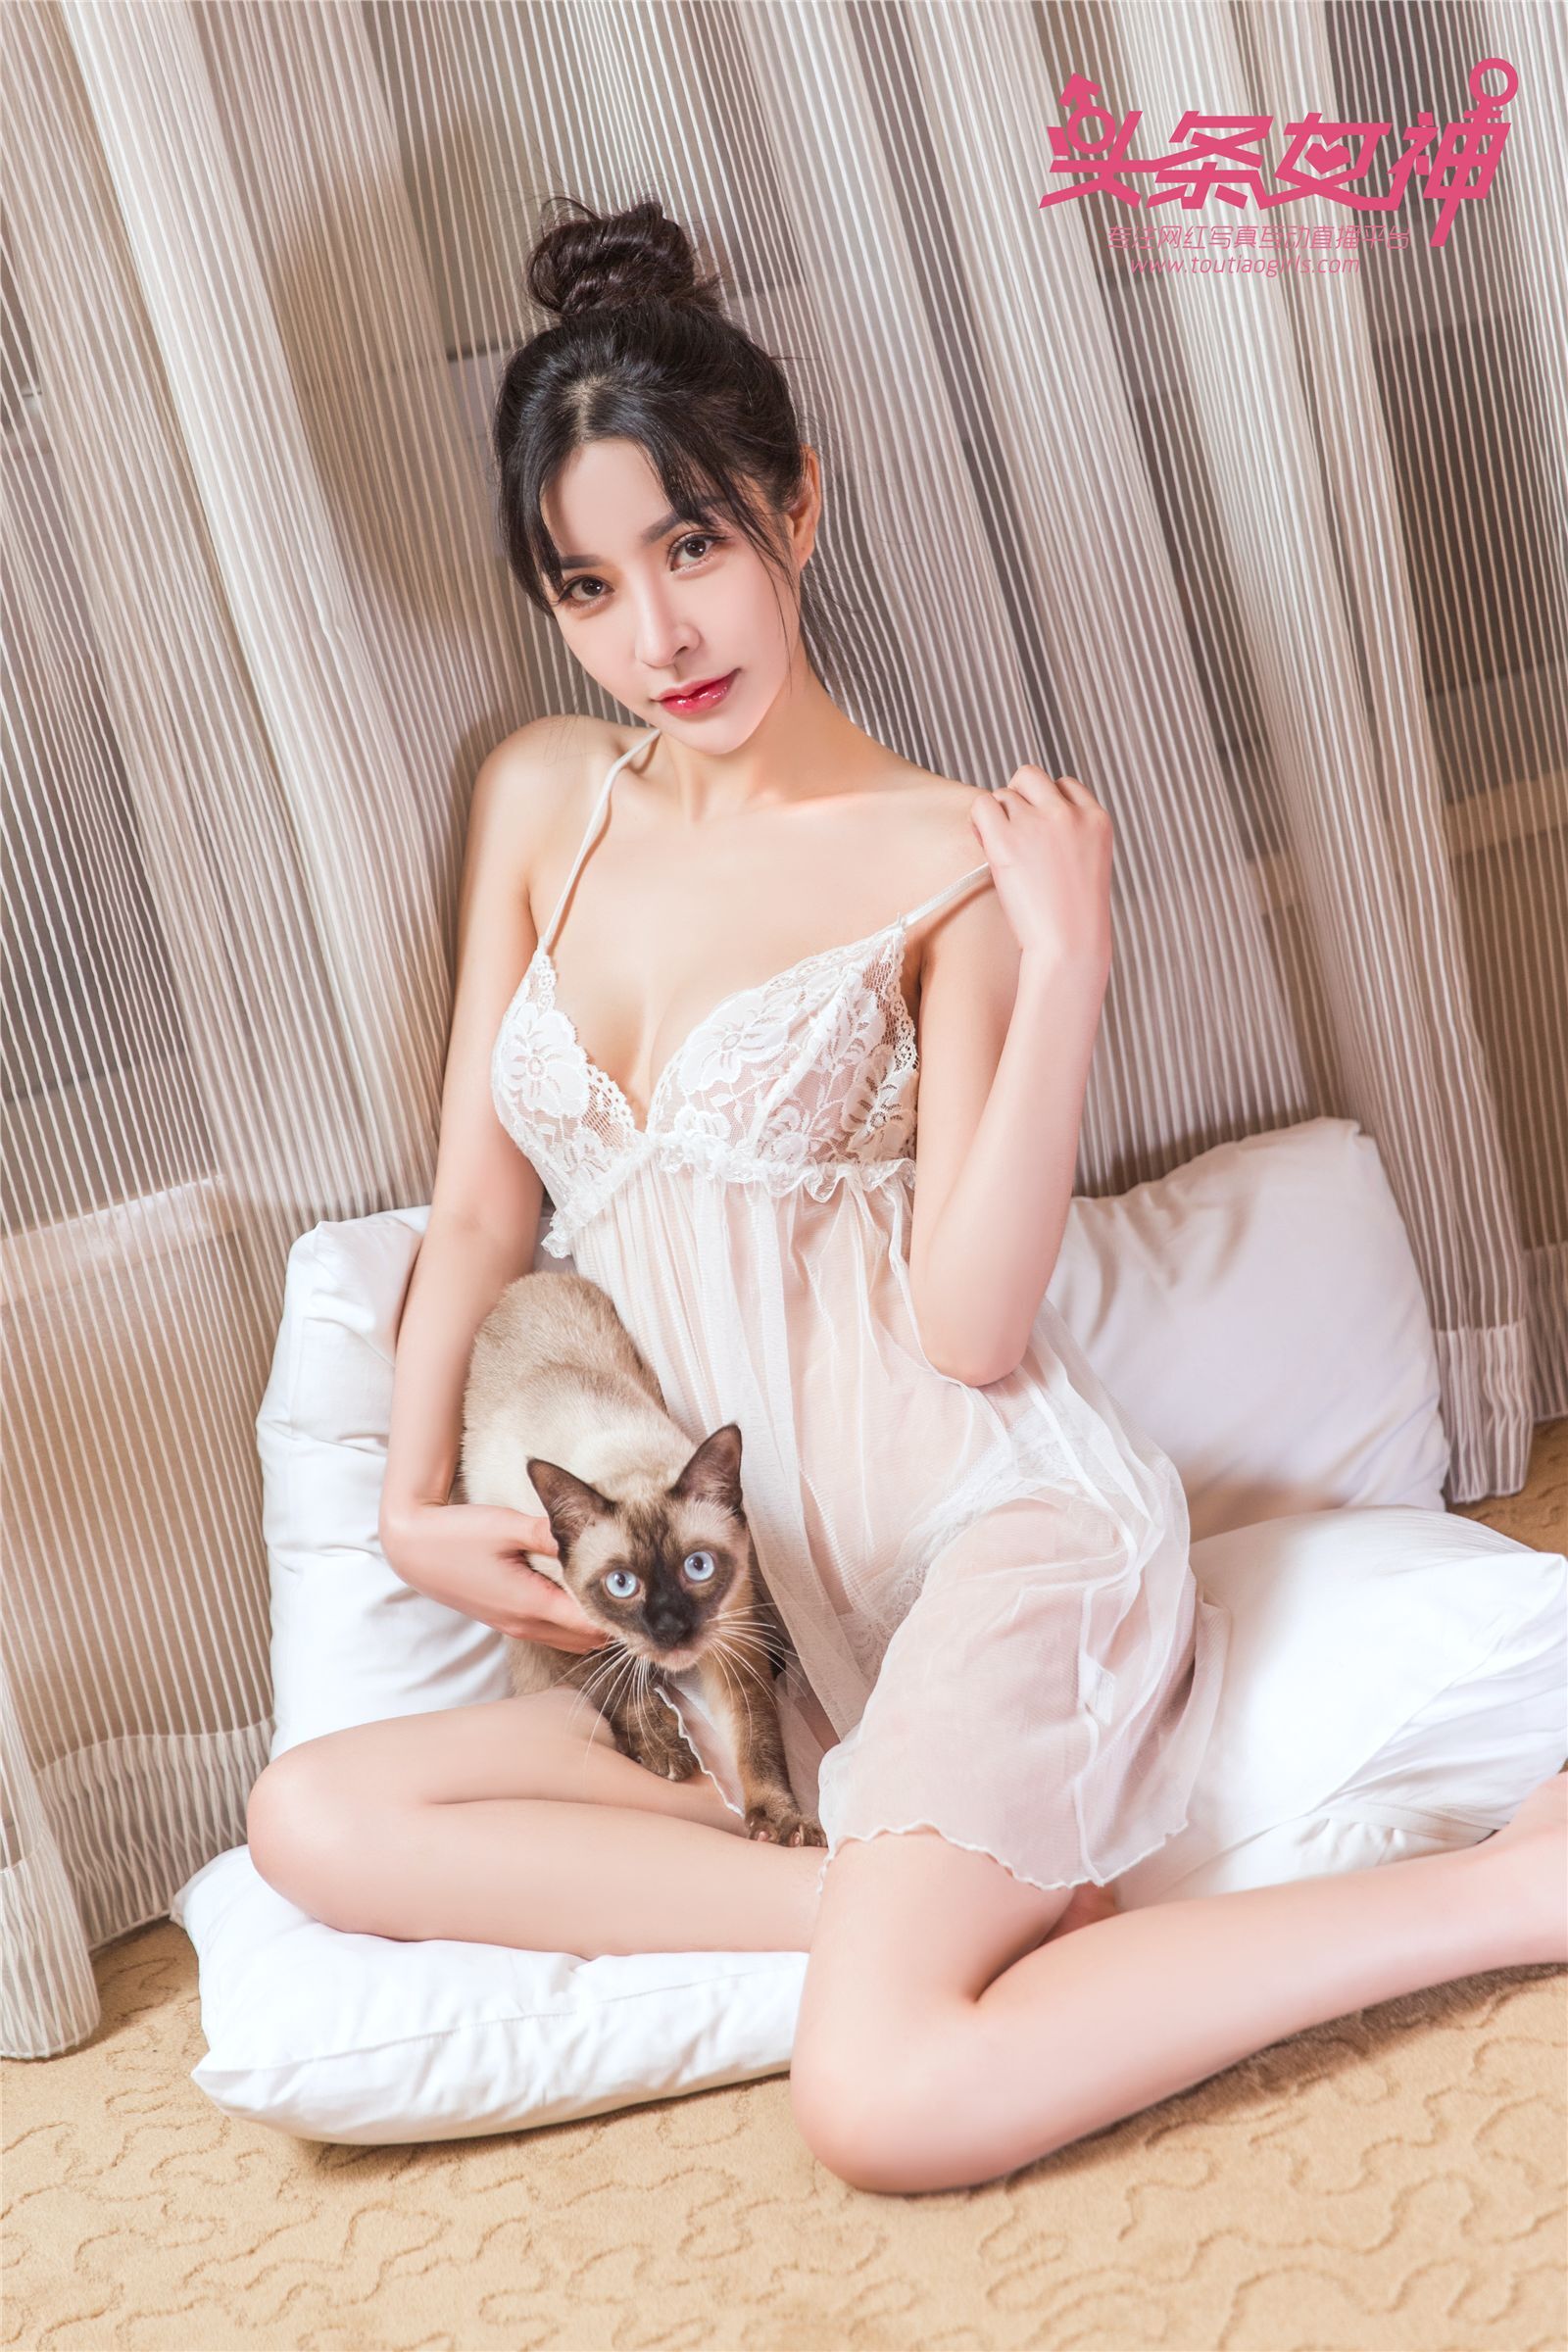 [Toutiao girls headline goddess] October 11, 2017 girl and cat baby